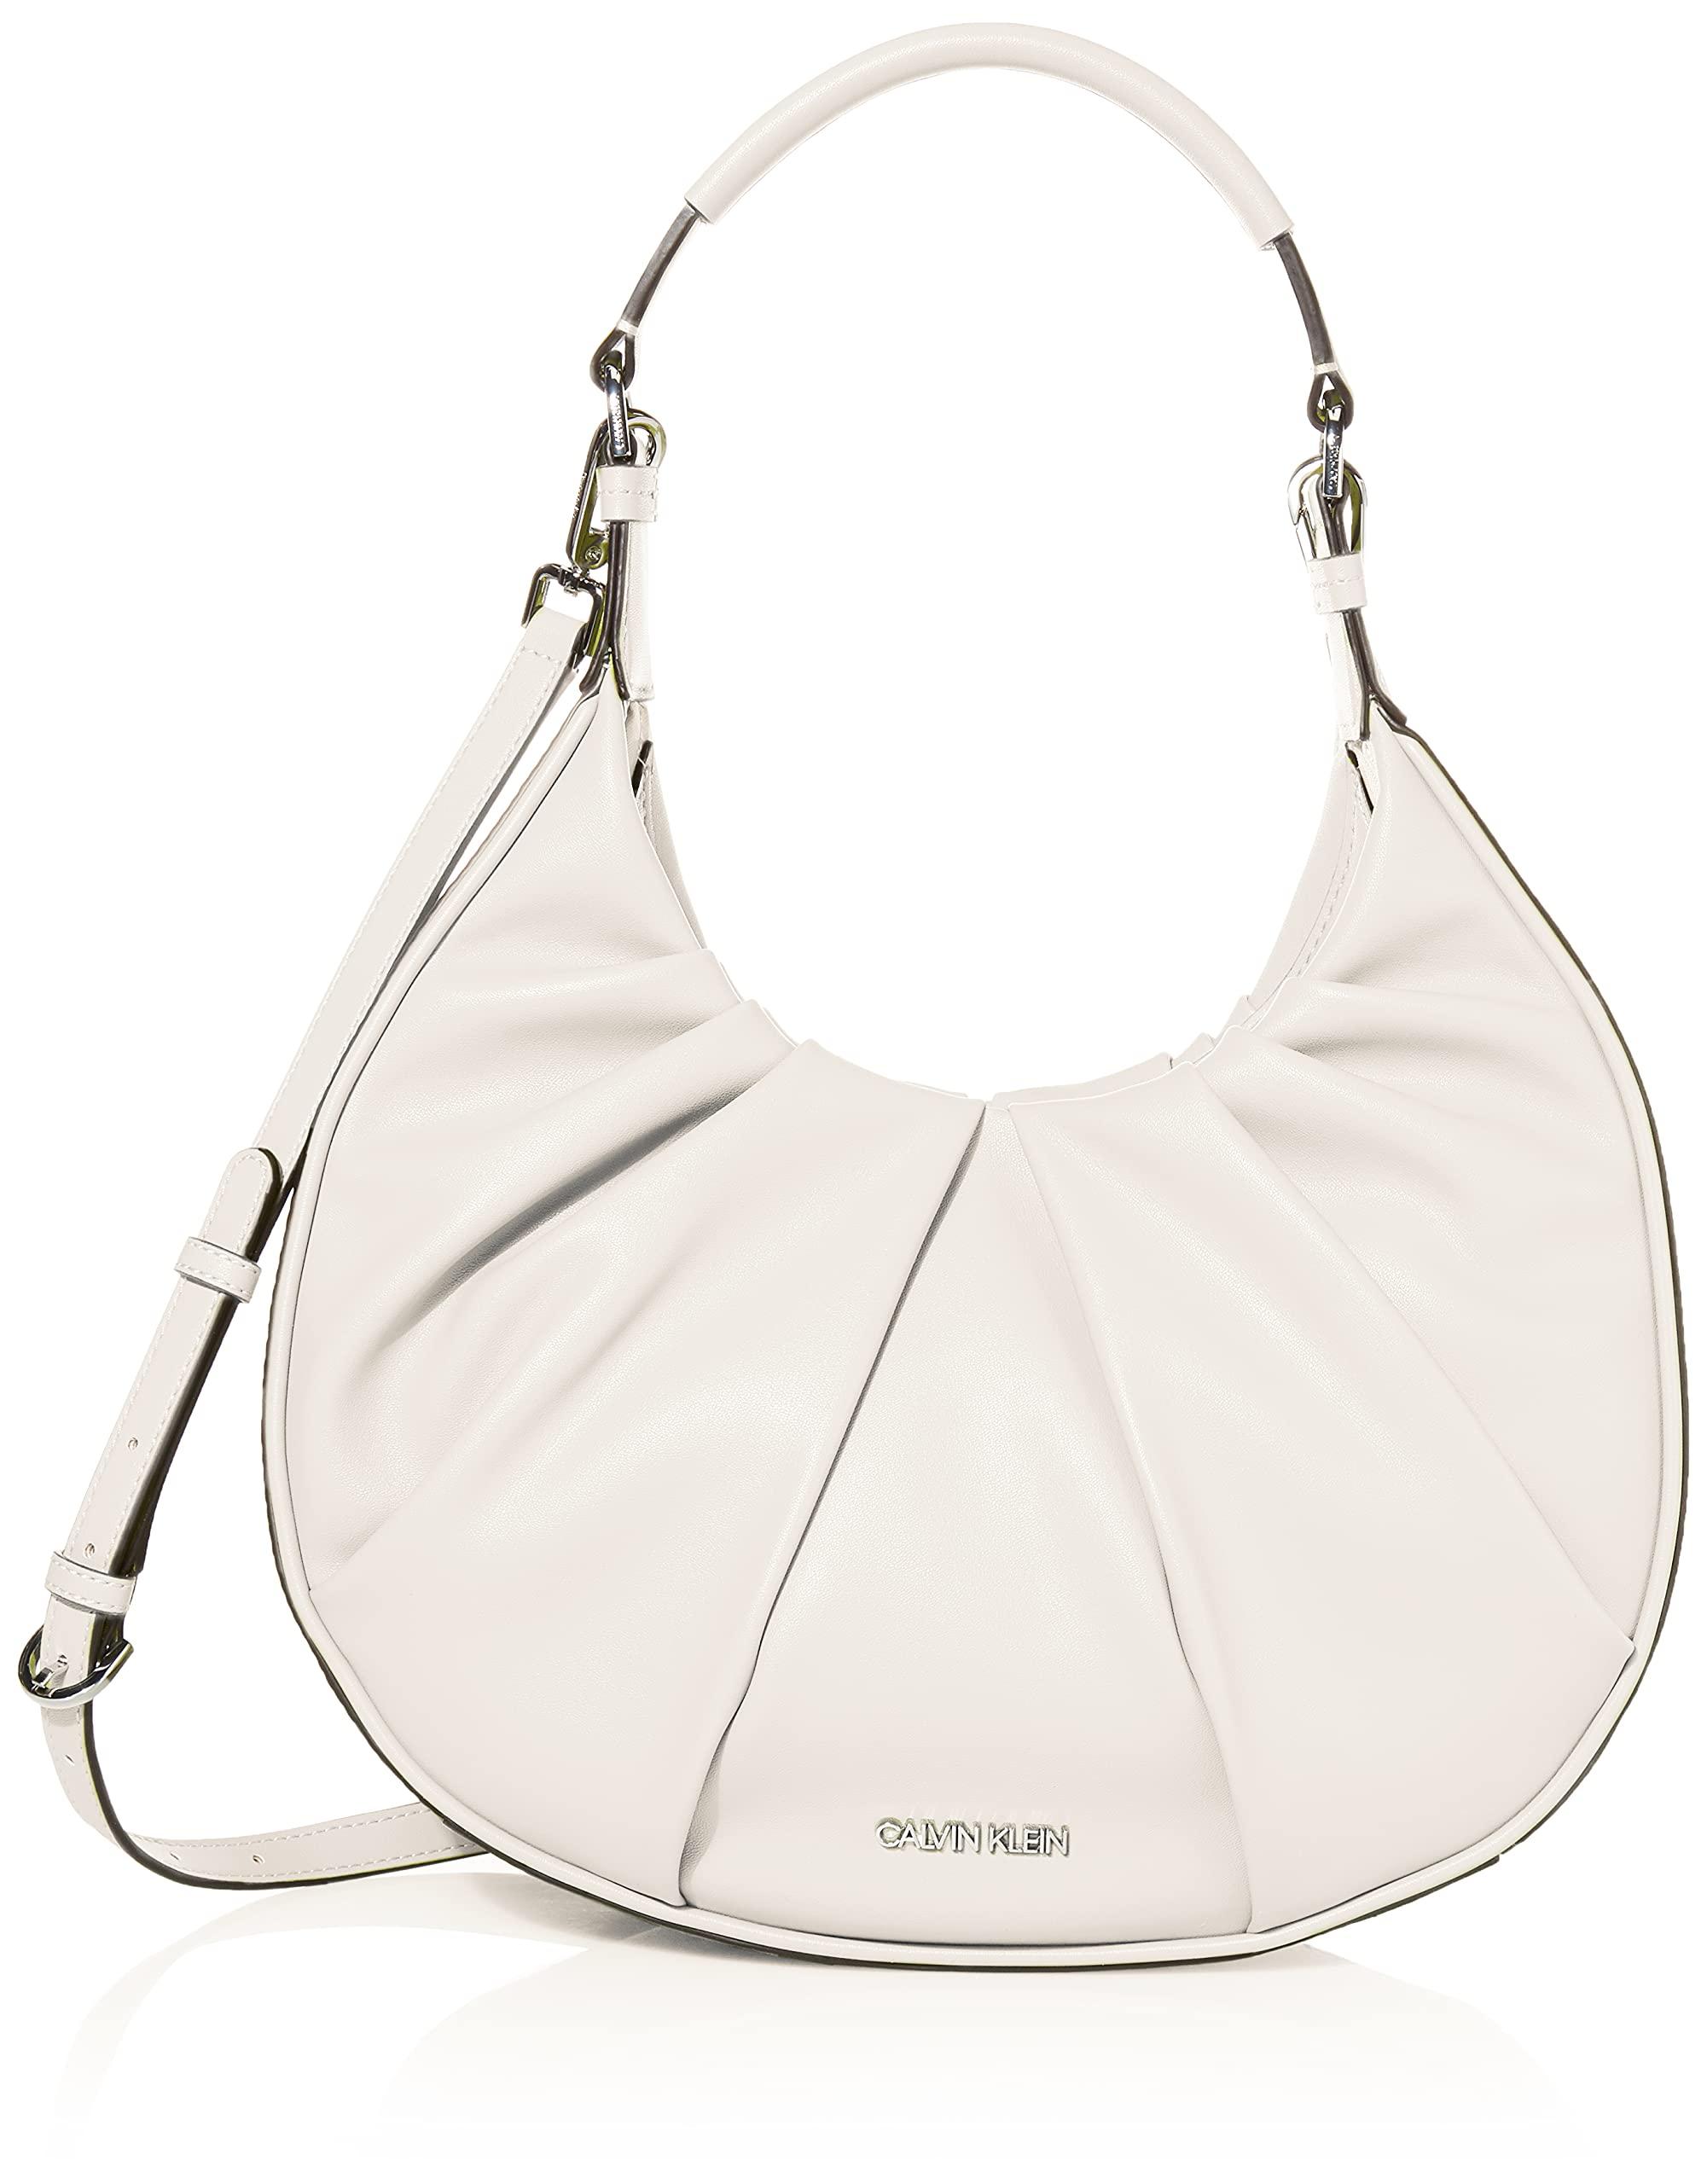 Calvin Klein Leather Myla Novelty Hobo Shoulder Bag in White - Lyst